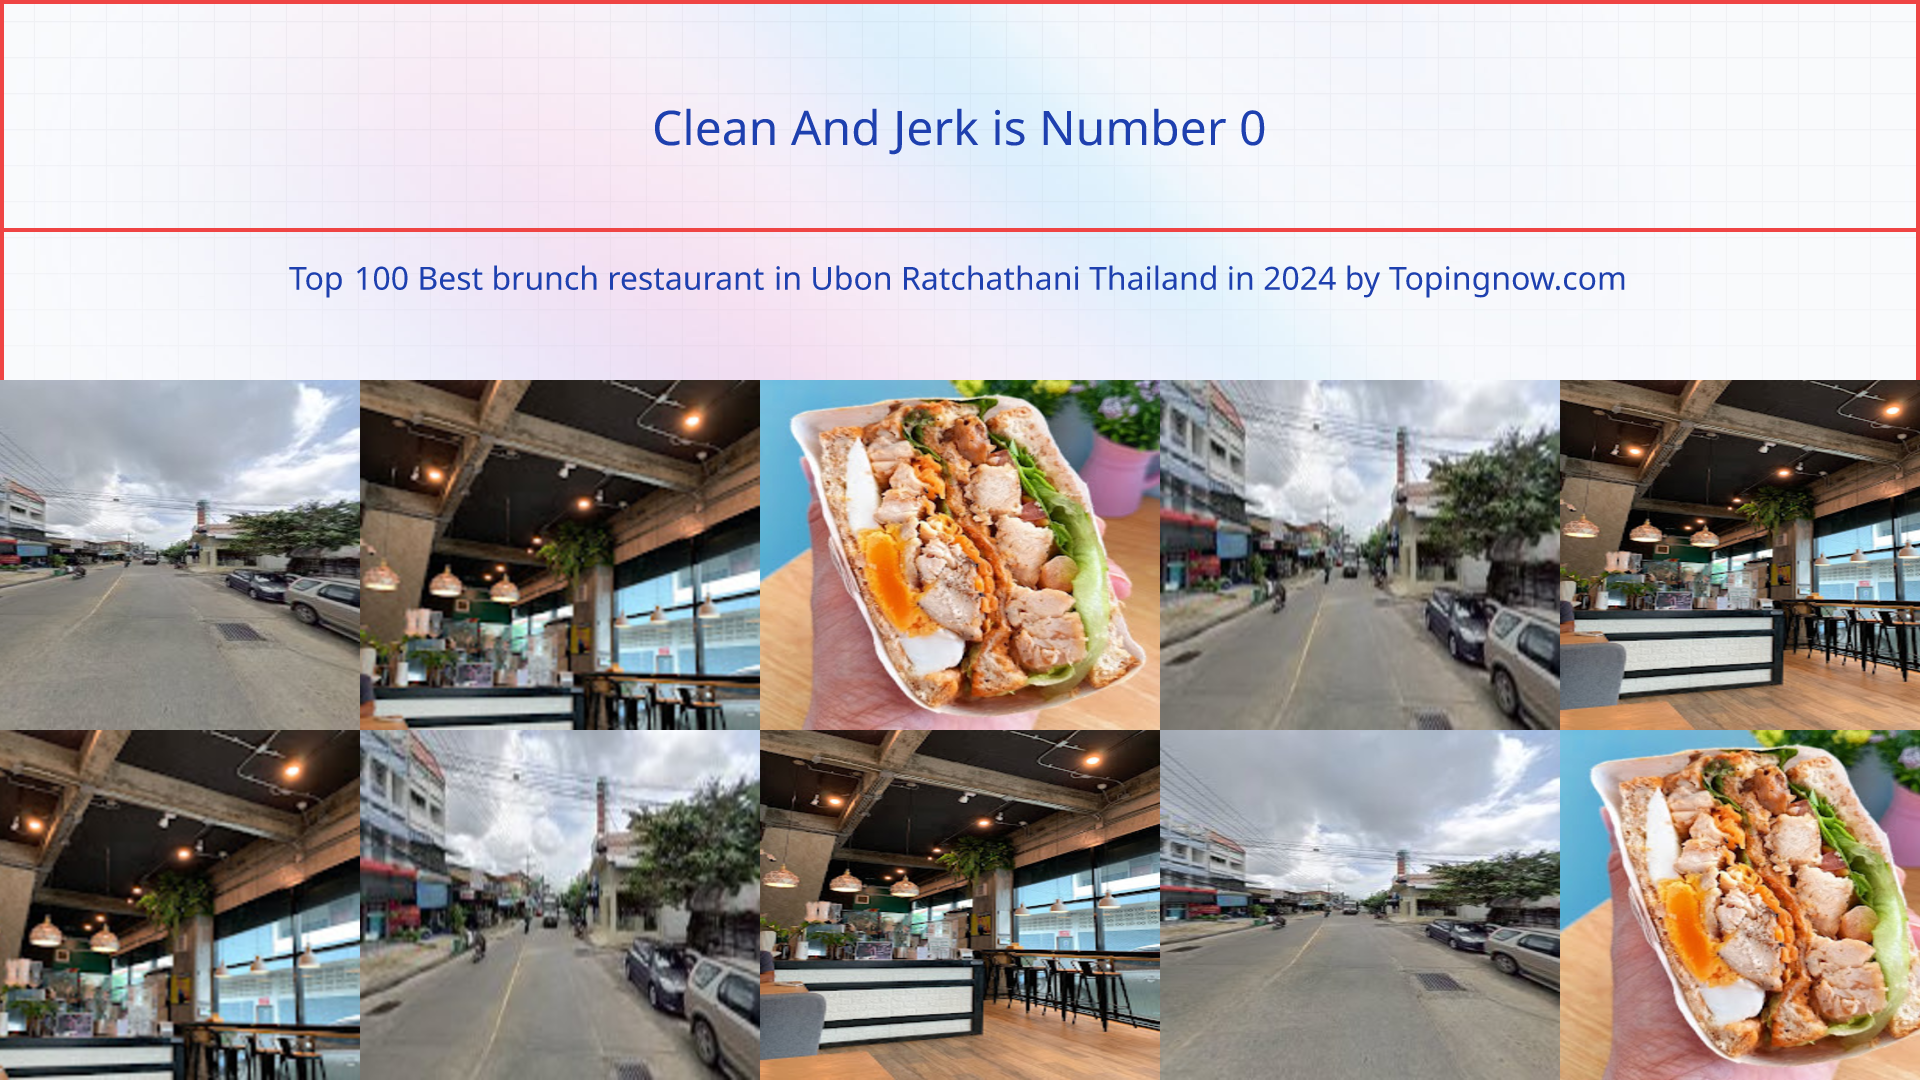 Clean And Jerk: Top 100 Best brunch restaurant in Ubon Ratchathani Thailand in 2024